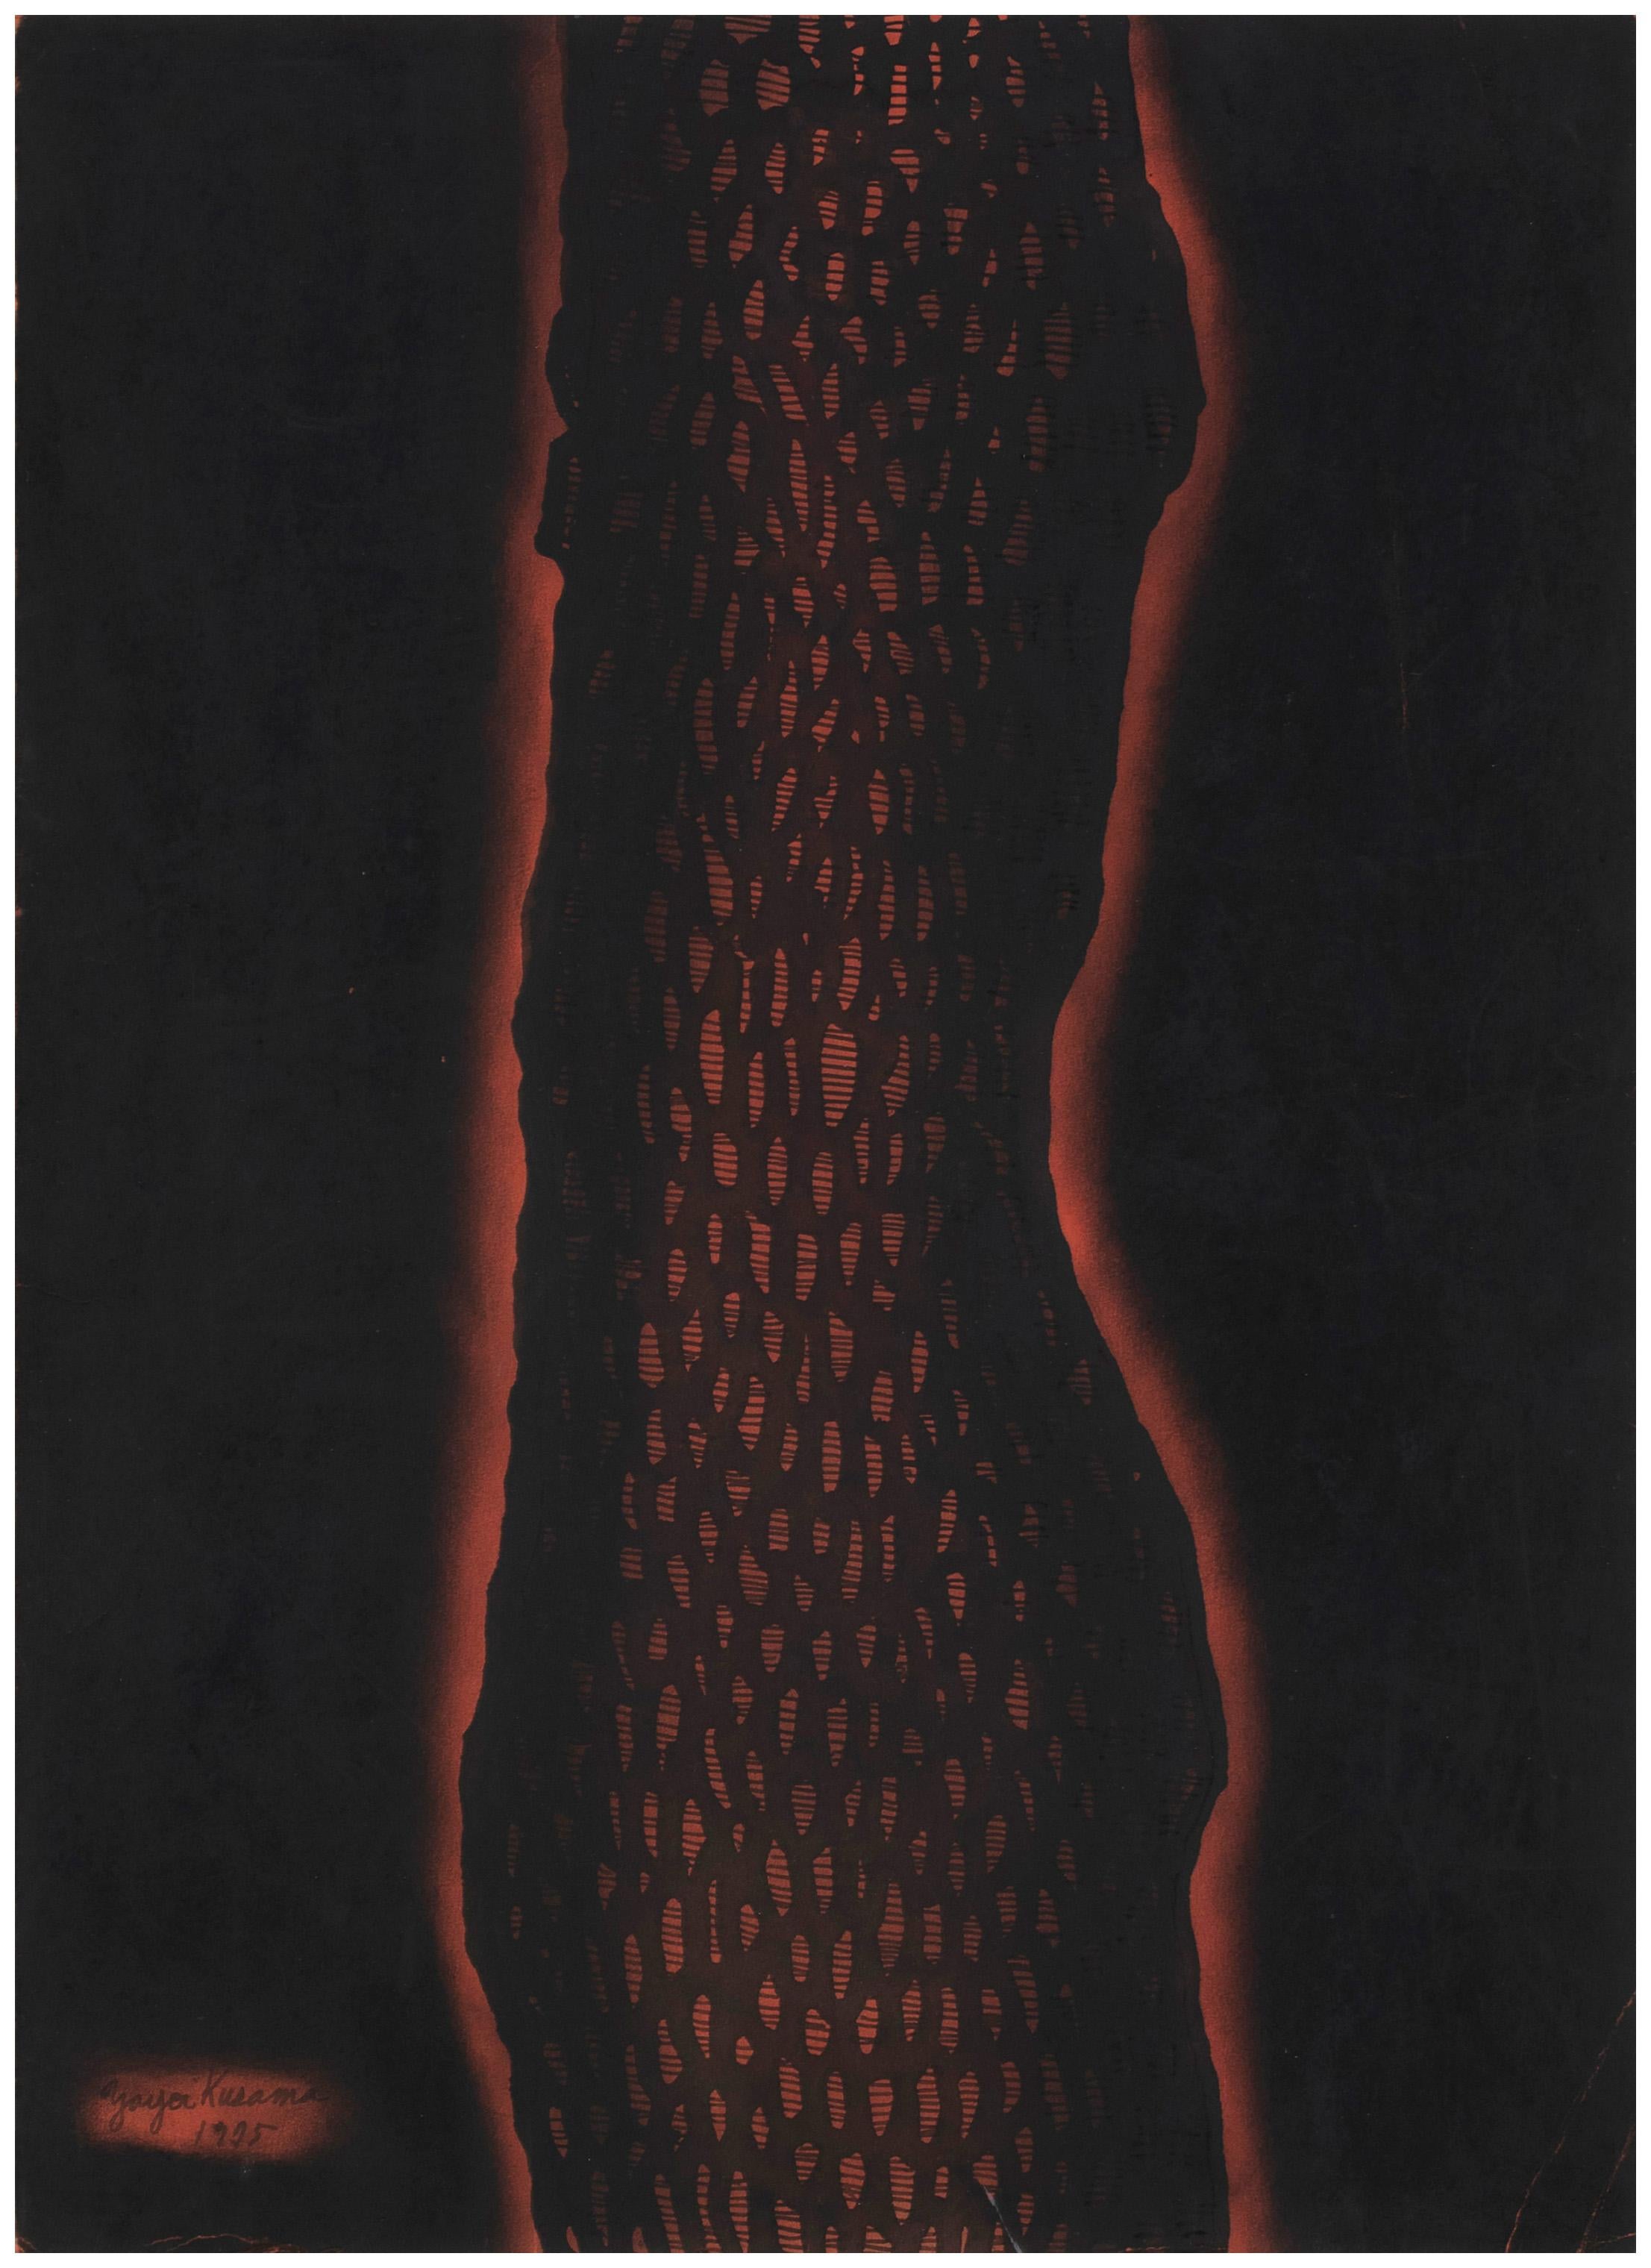 Red River Inside my Eyelids by Yayoi Kusama - Contemporary art, female artist